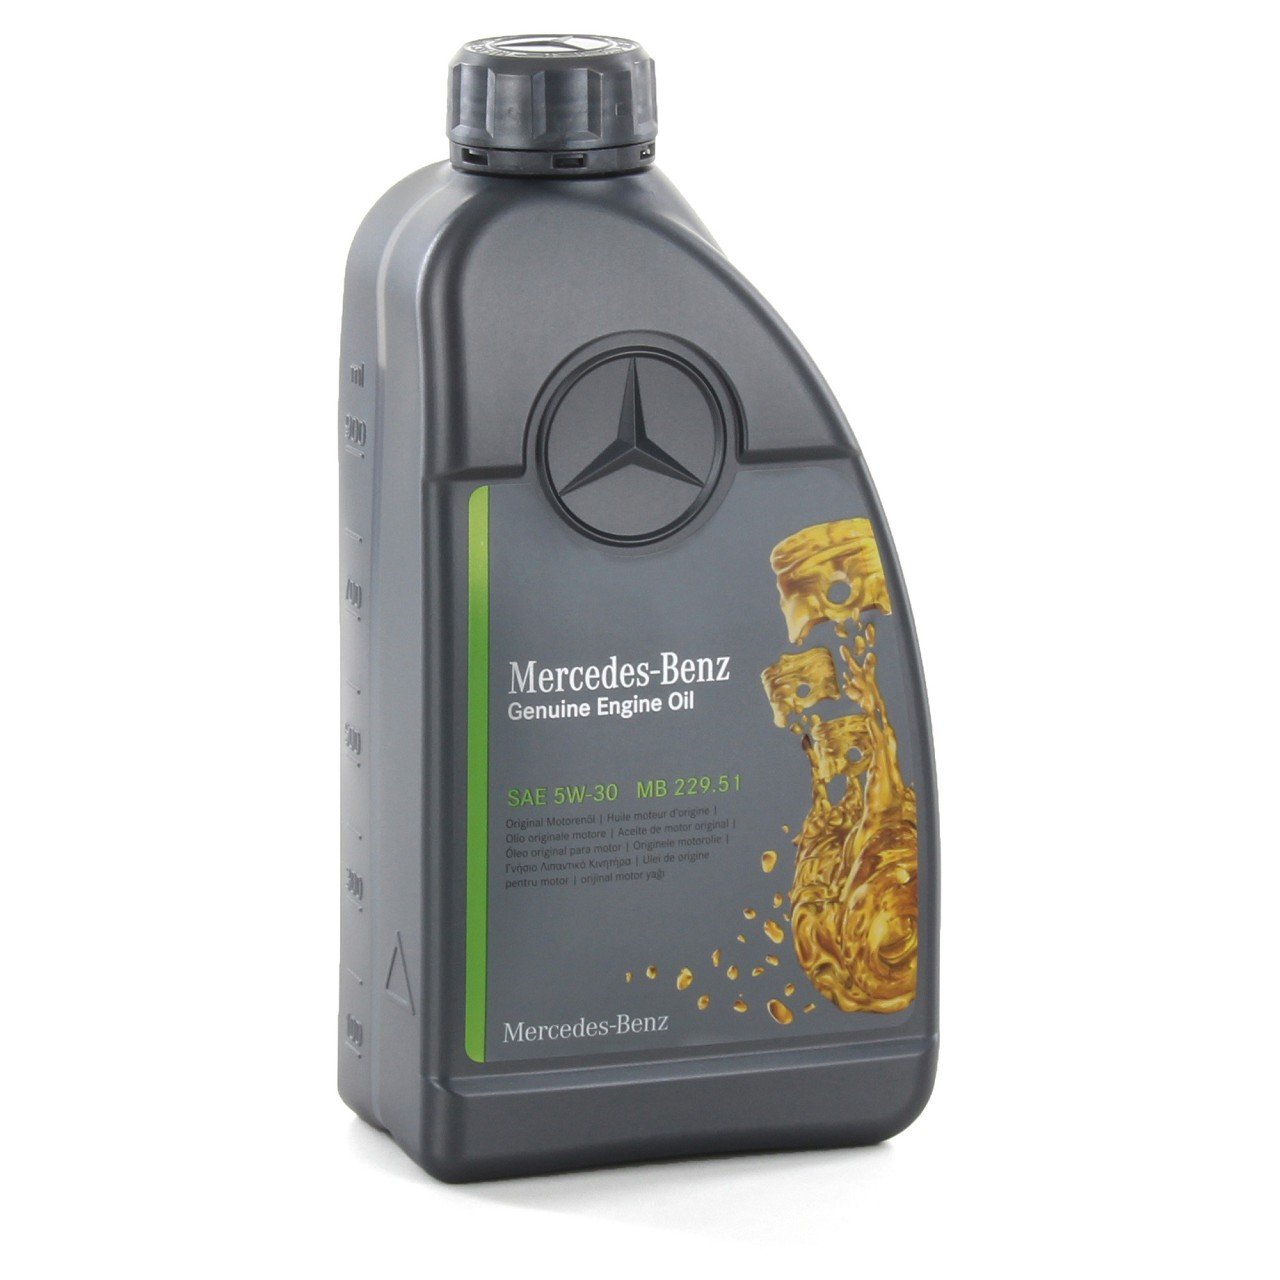 ORIGINAL Mercedes-Benz ÖL Motoröl 5W30 MB 229.51 6 Liter + Ölfilter 6111800009